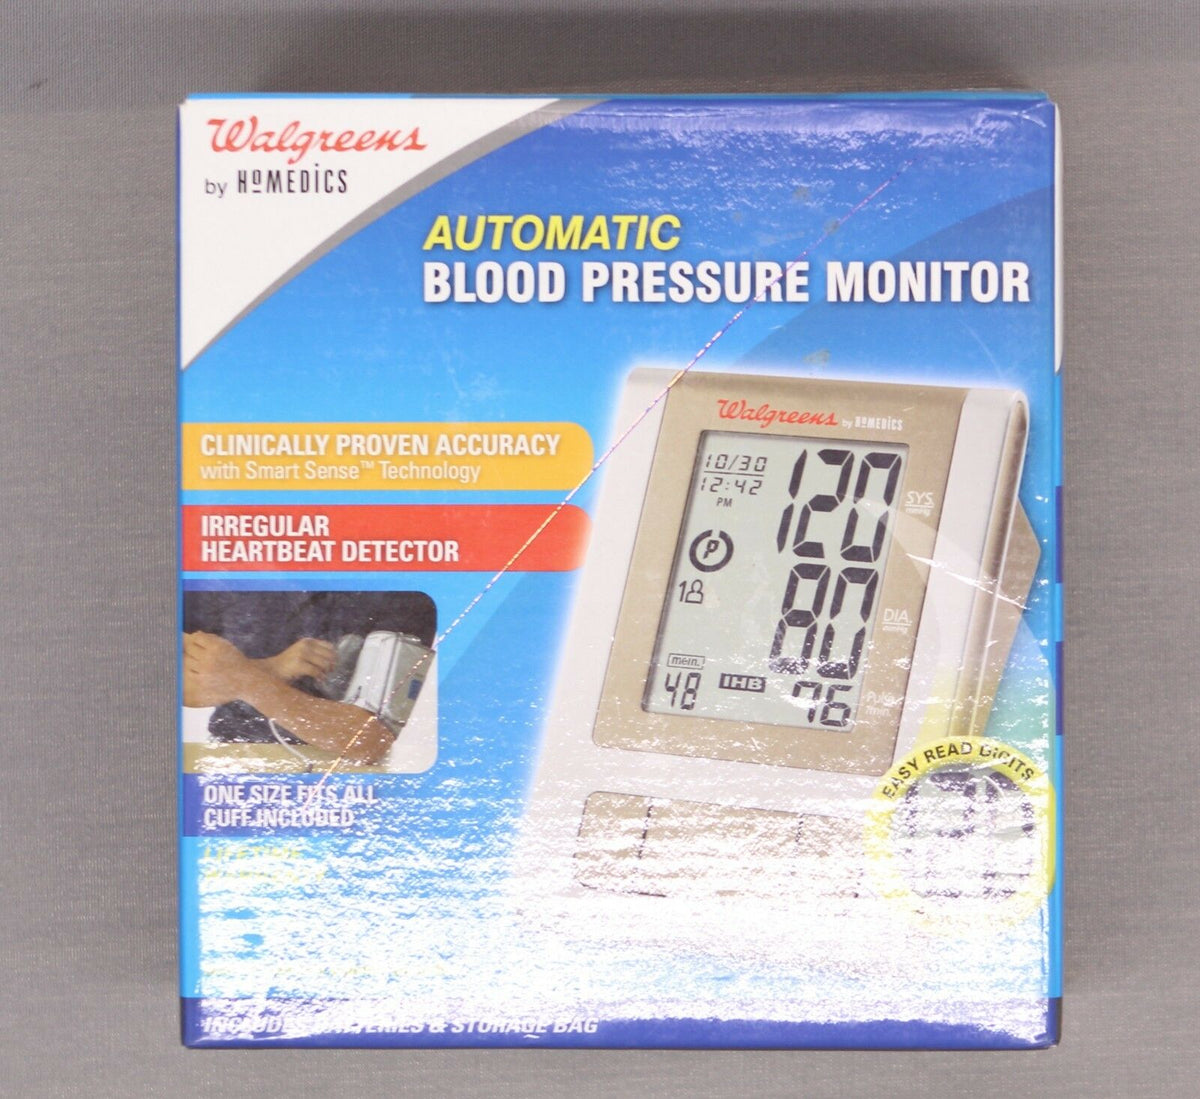 Automatic Wrist Blood Pressure Monitor with Smart Measure Technology -  Homedics